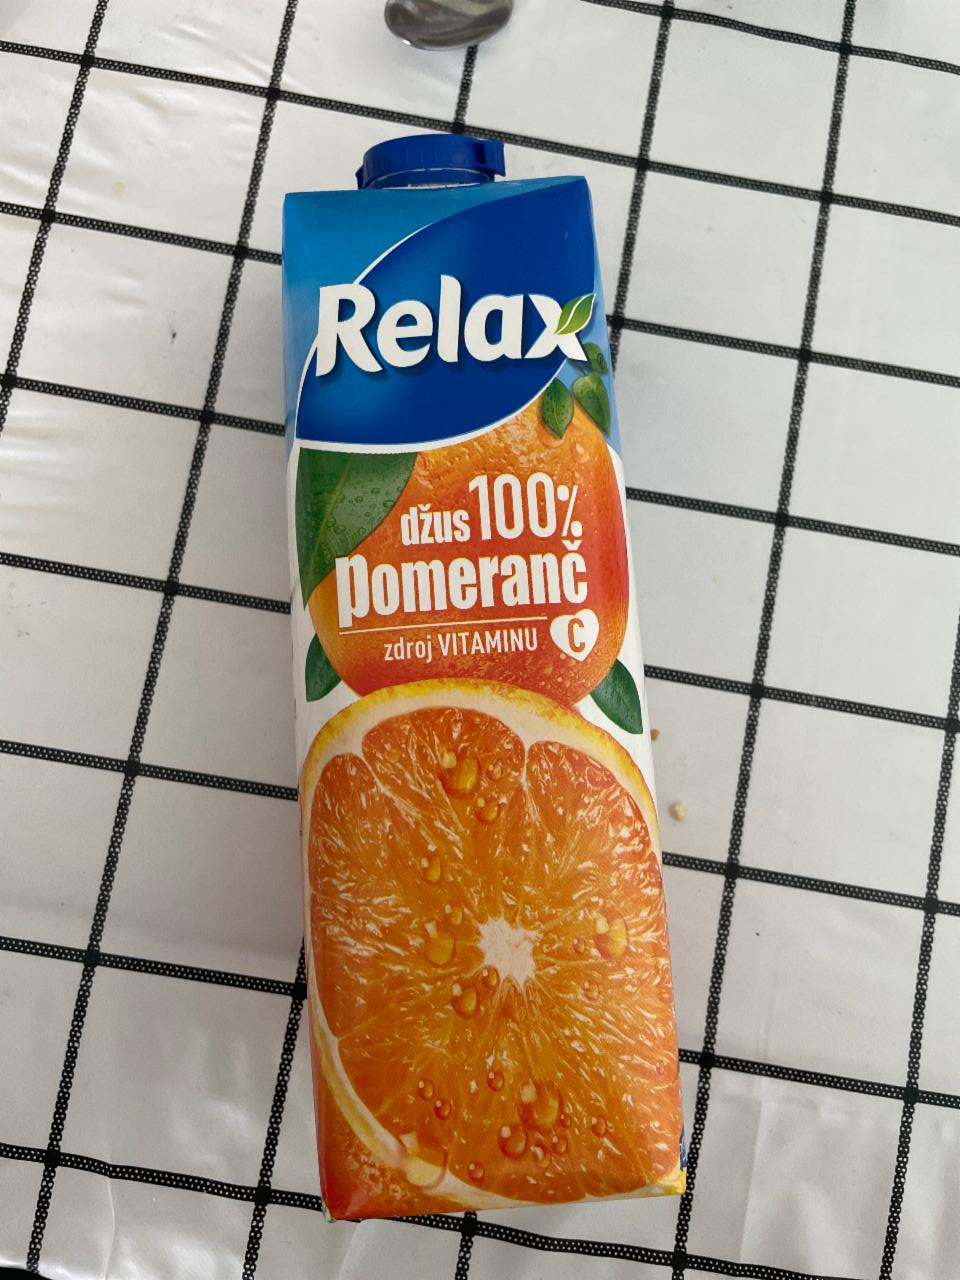 Фото - Džus 100% pomeranč Relax